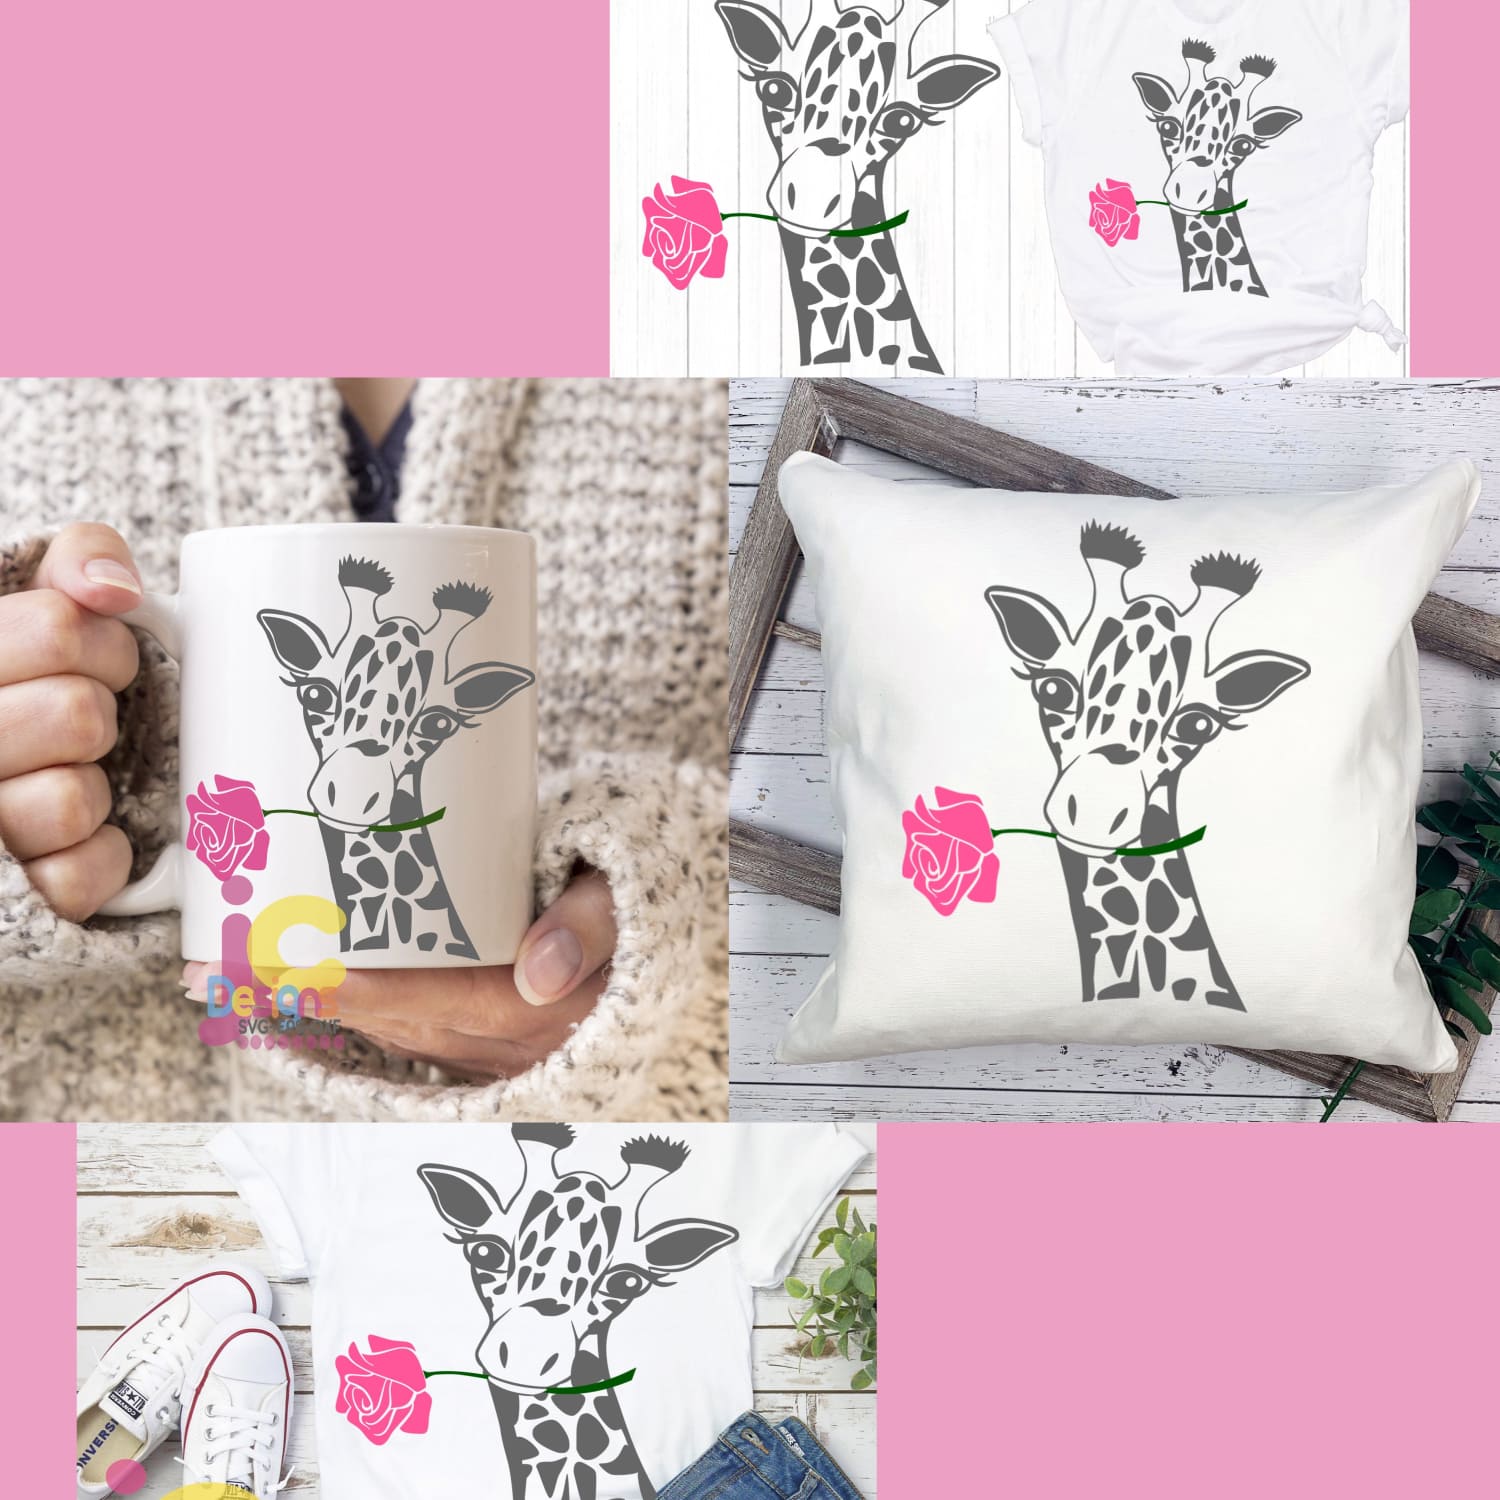 Collage of photos of a giraffe holding a coffee mug.